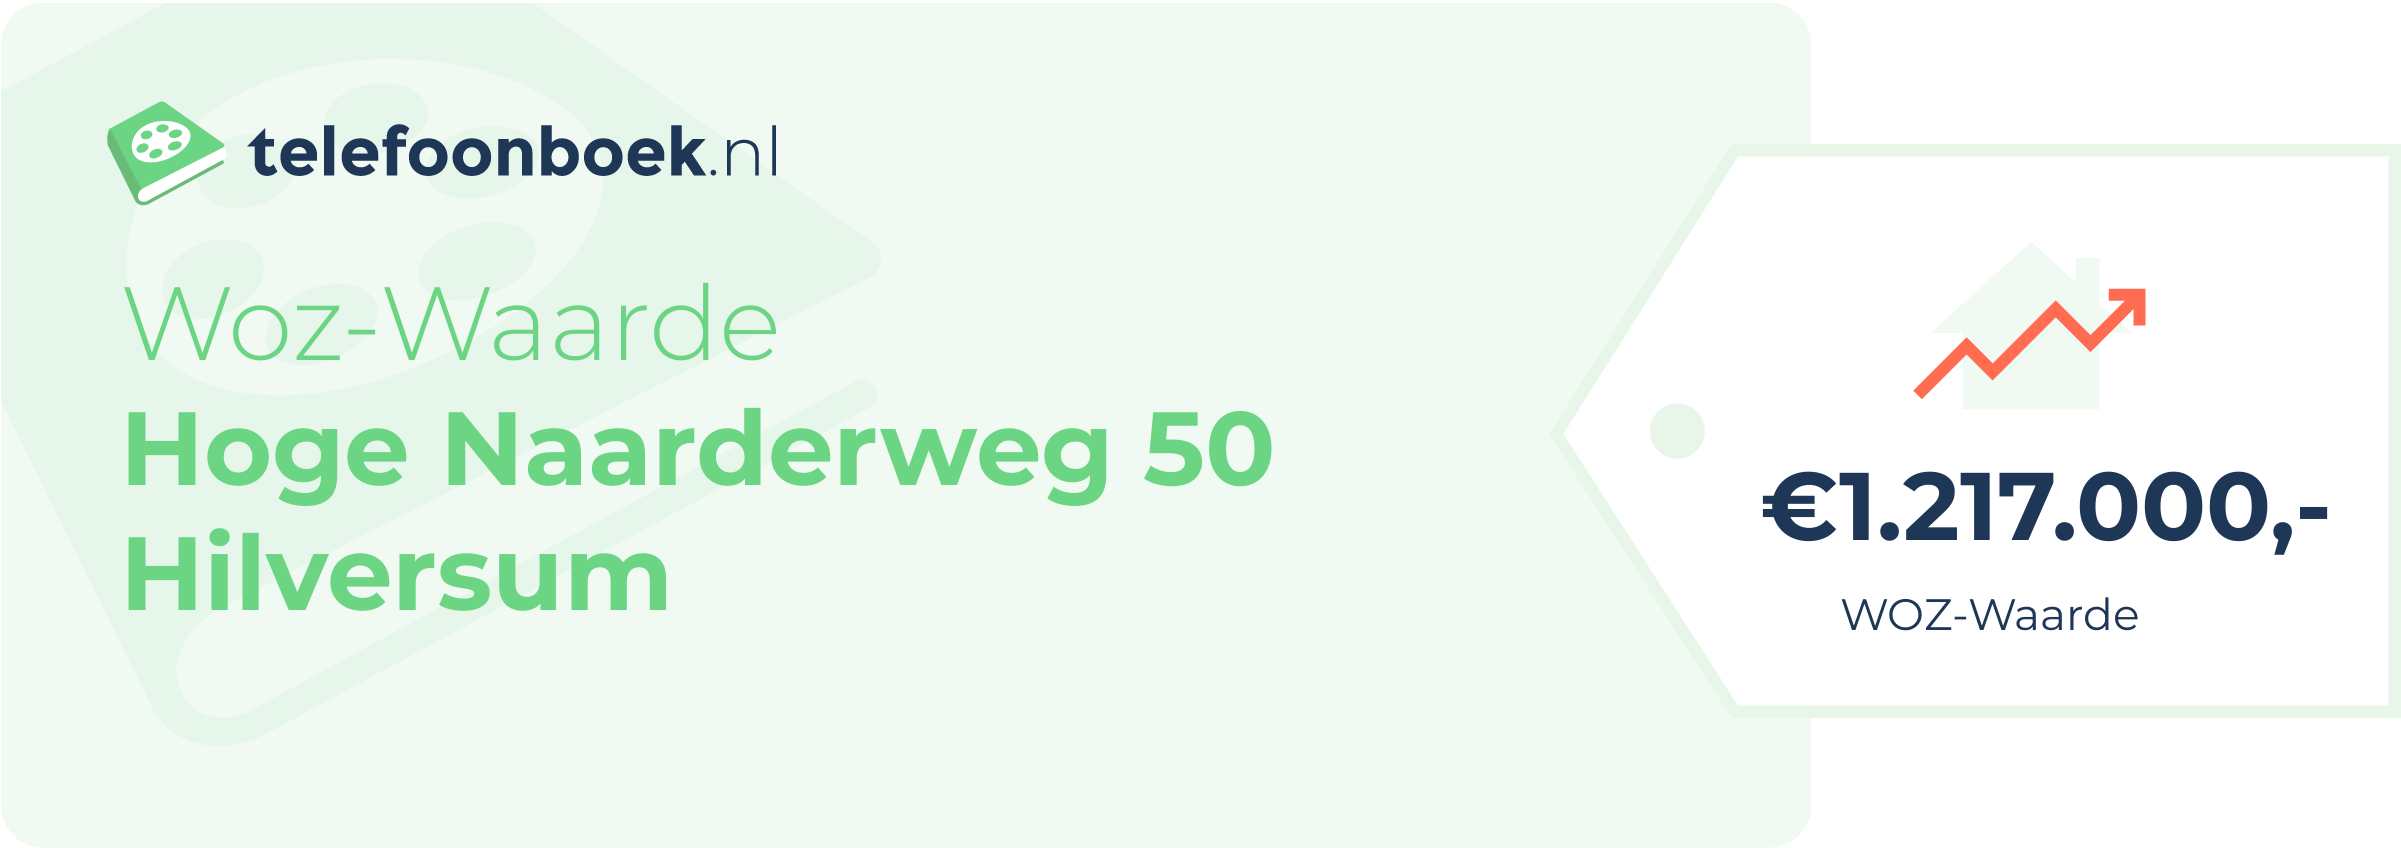 WOZ-waarde Hoge Naarderweg 50 Hilversum